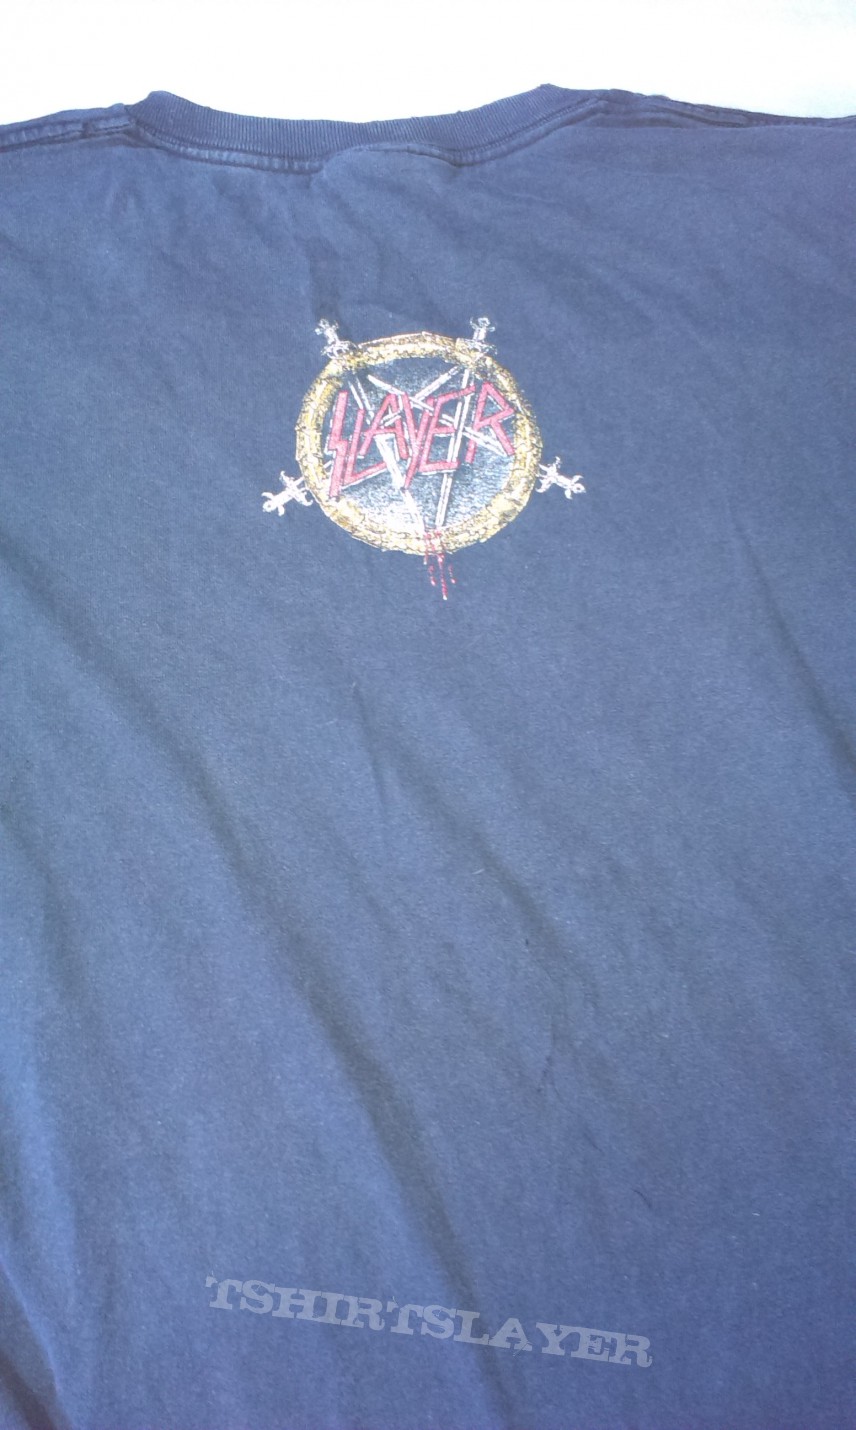 Slayer eagle shirt for sale/trade